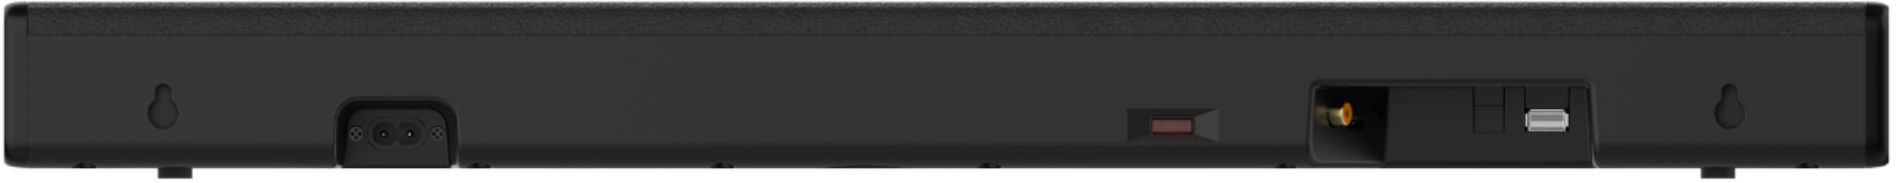 Back View: Hisense - 2.1-Channel Soundbar with Built-in Subwoofer - black